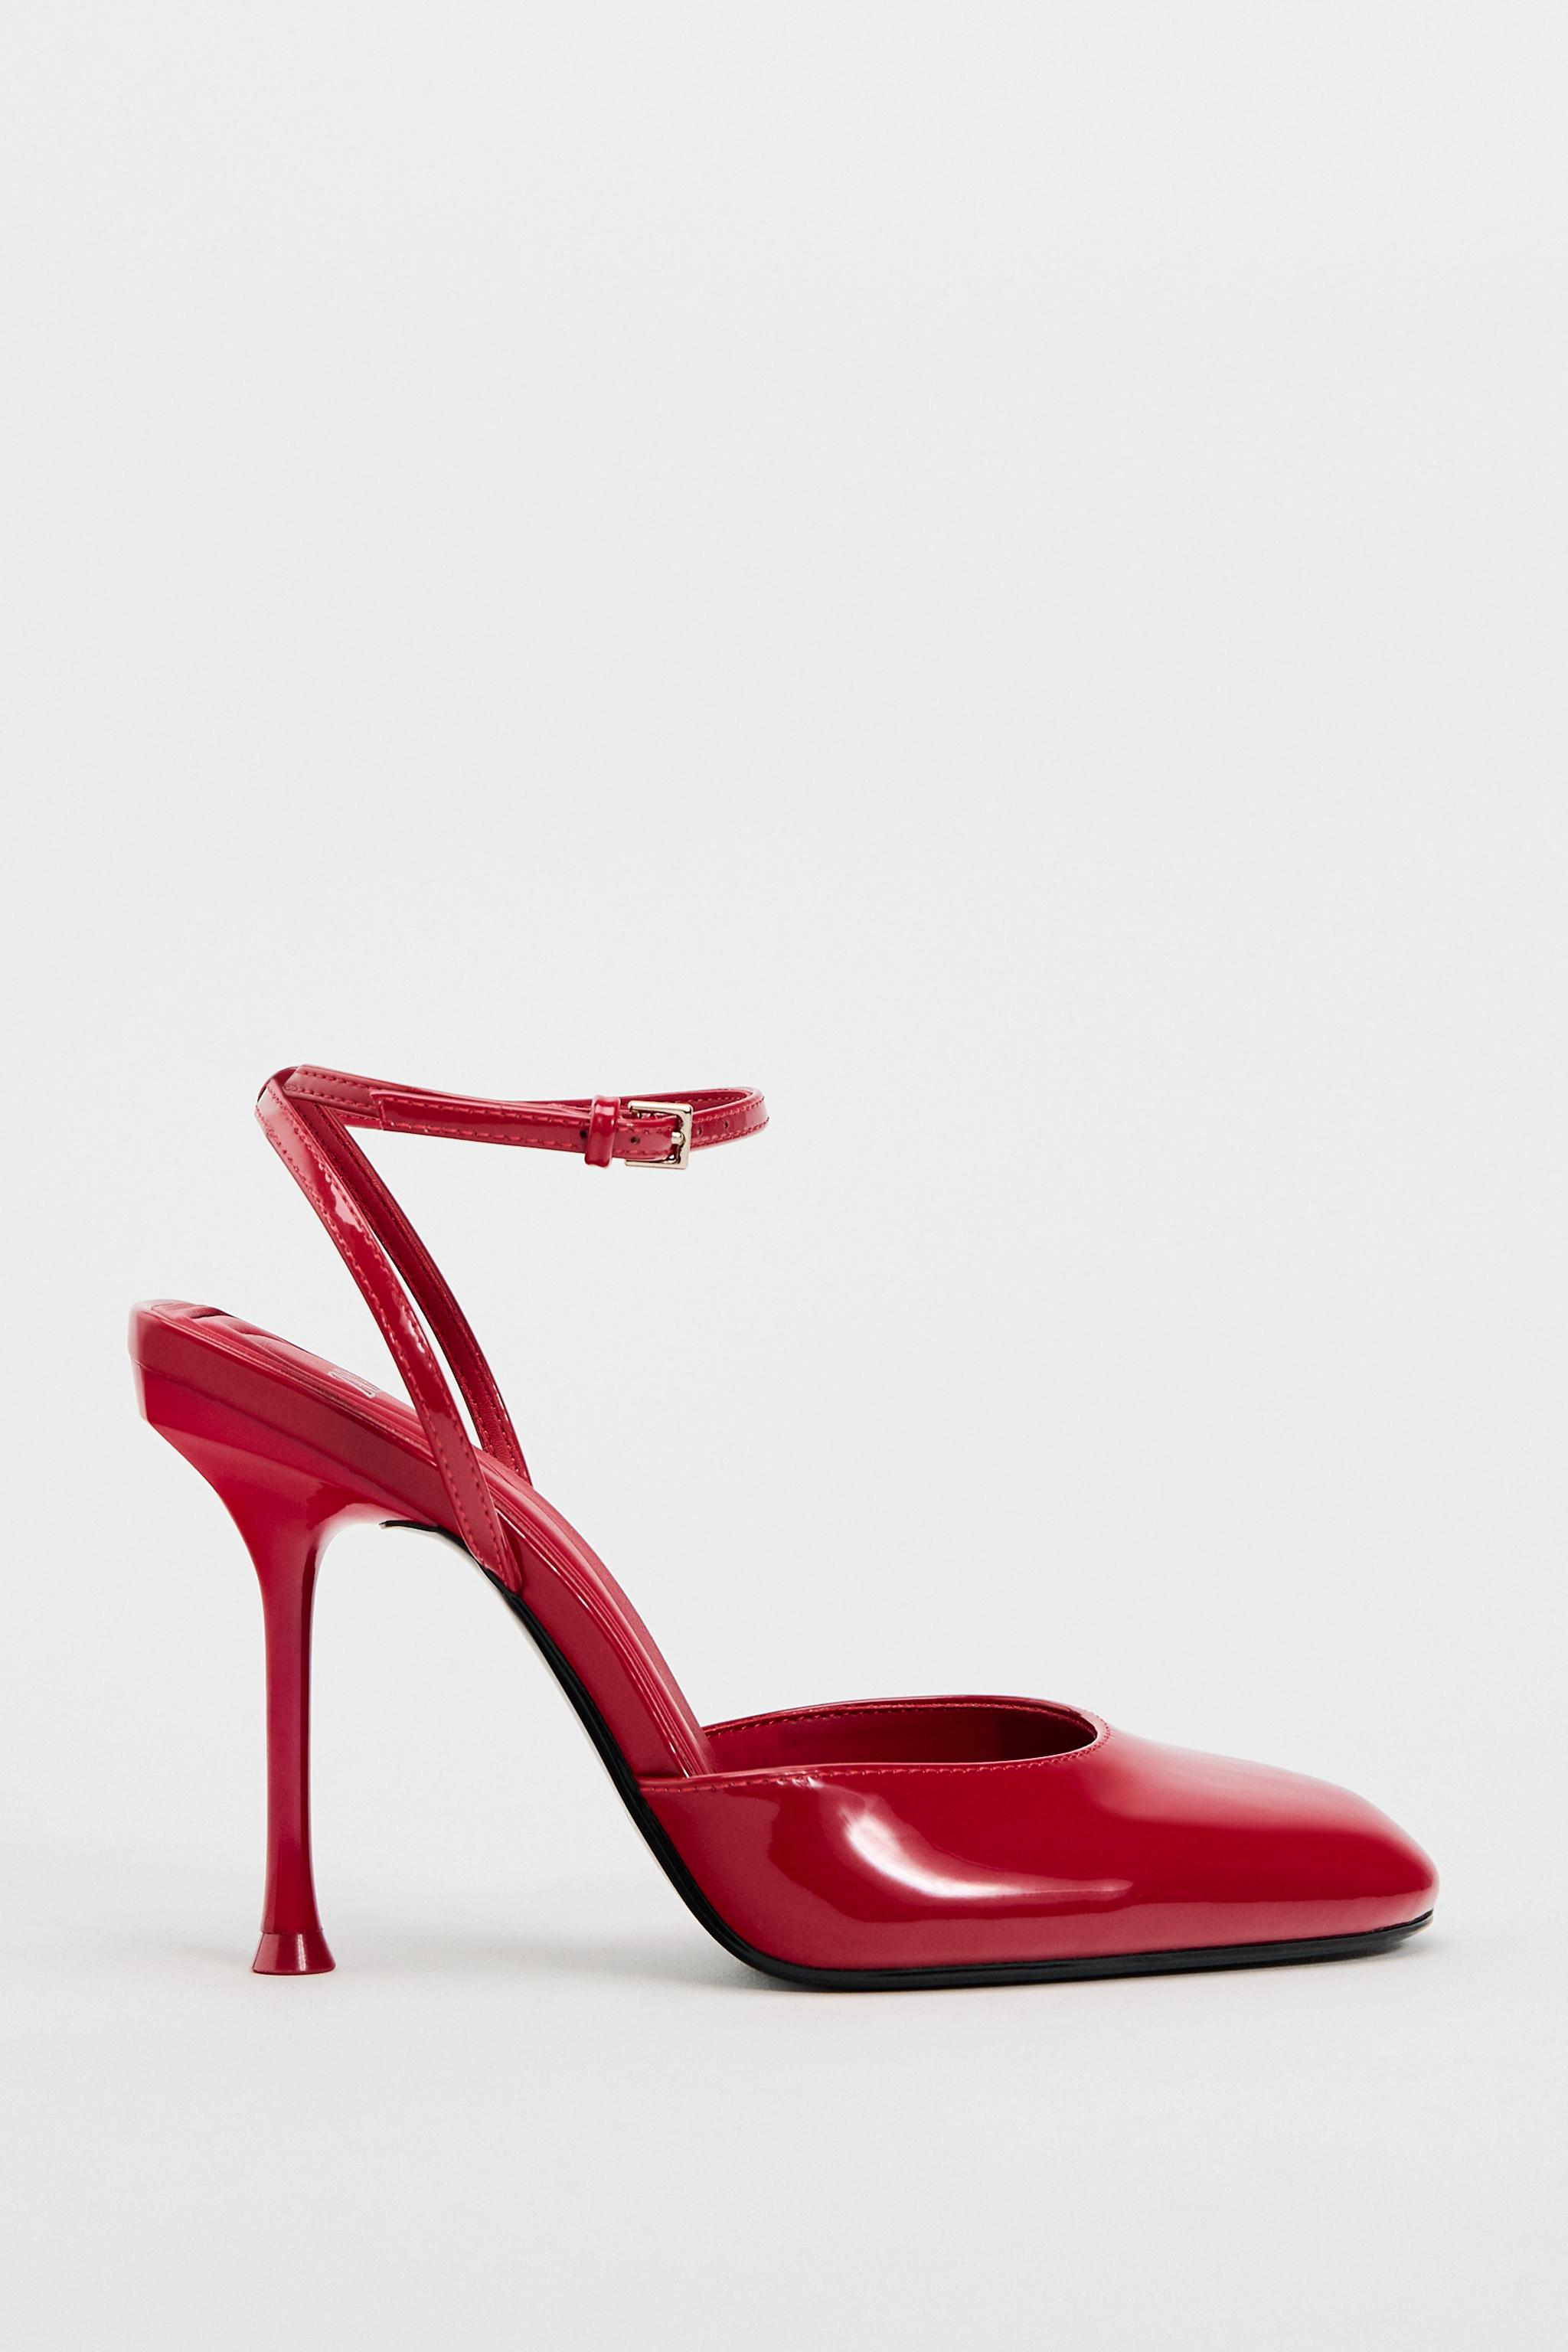 Buy Calvin Klein Women's Gayle Pump, Crimson Red, 8.5 at Amazon.in